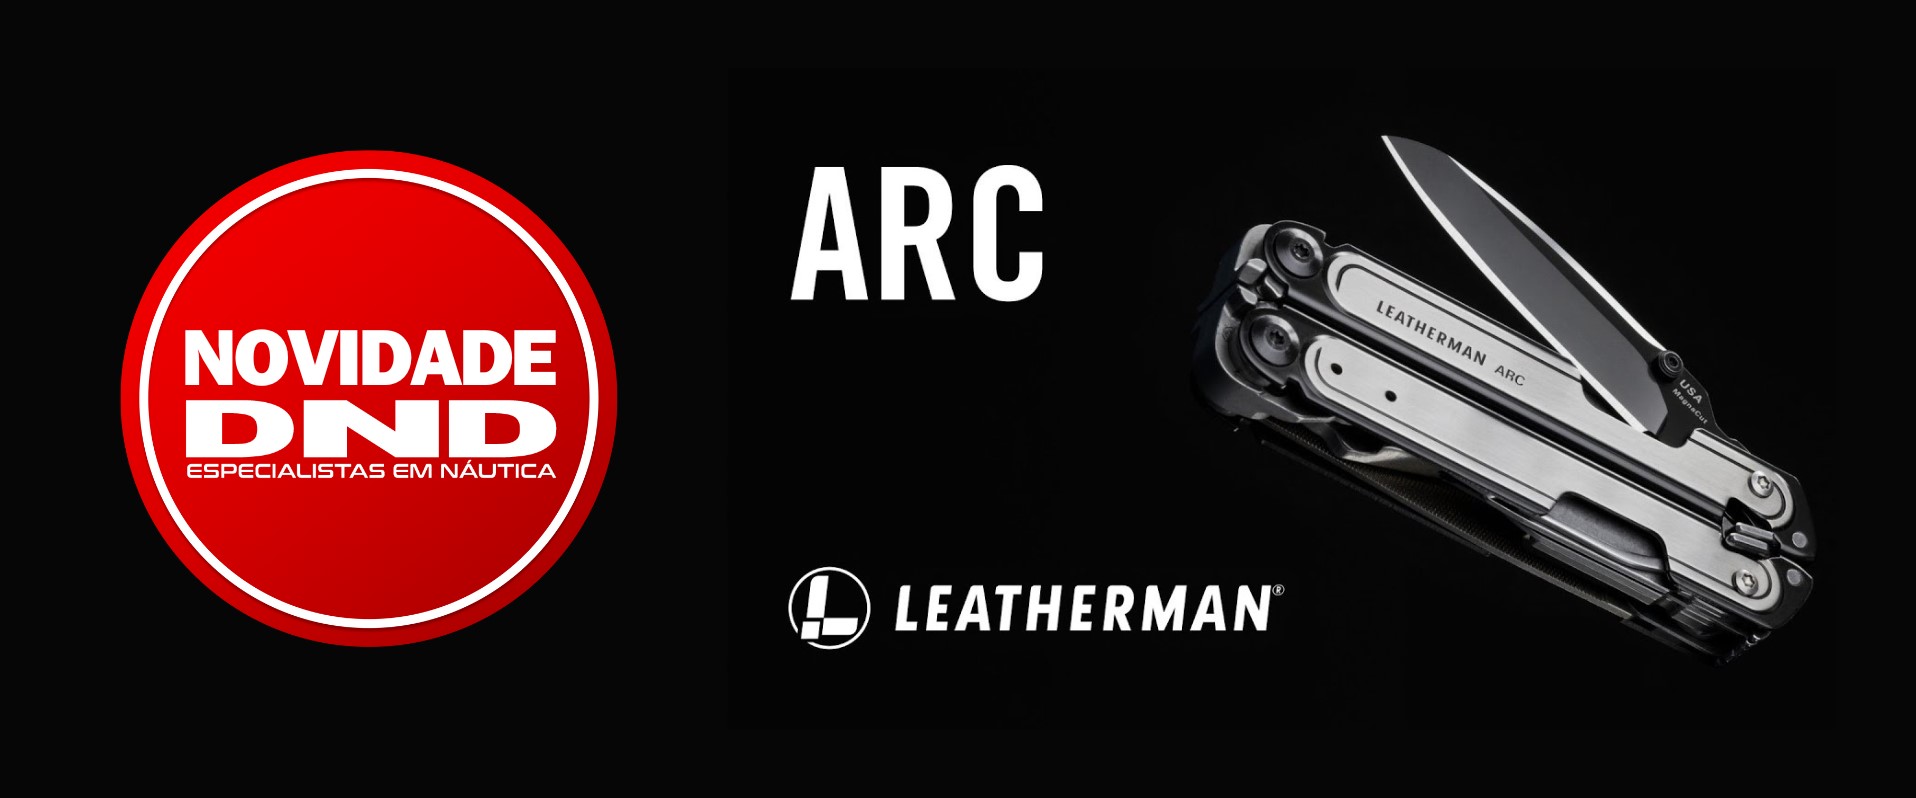 Leatherman ARC